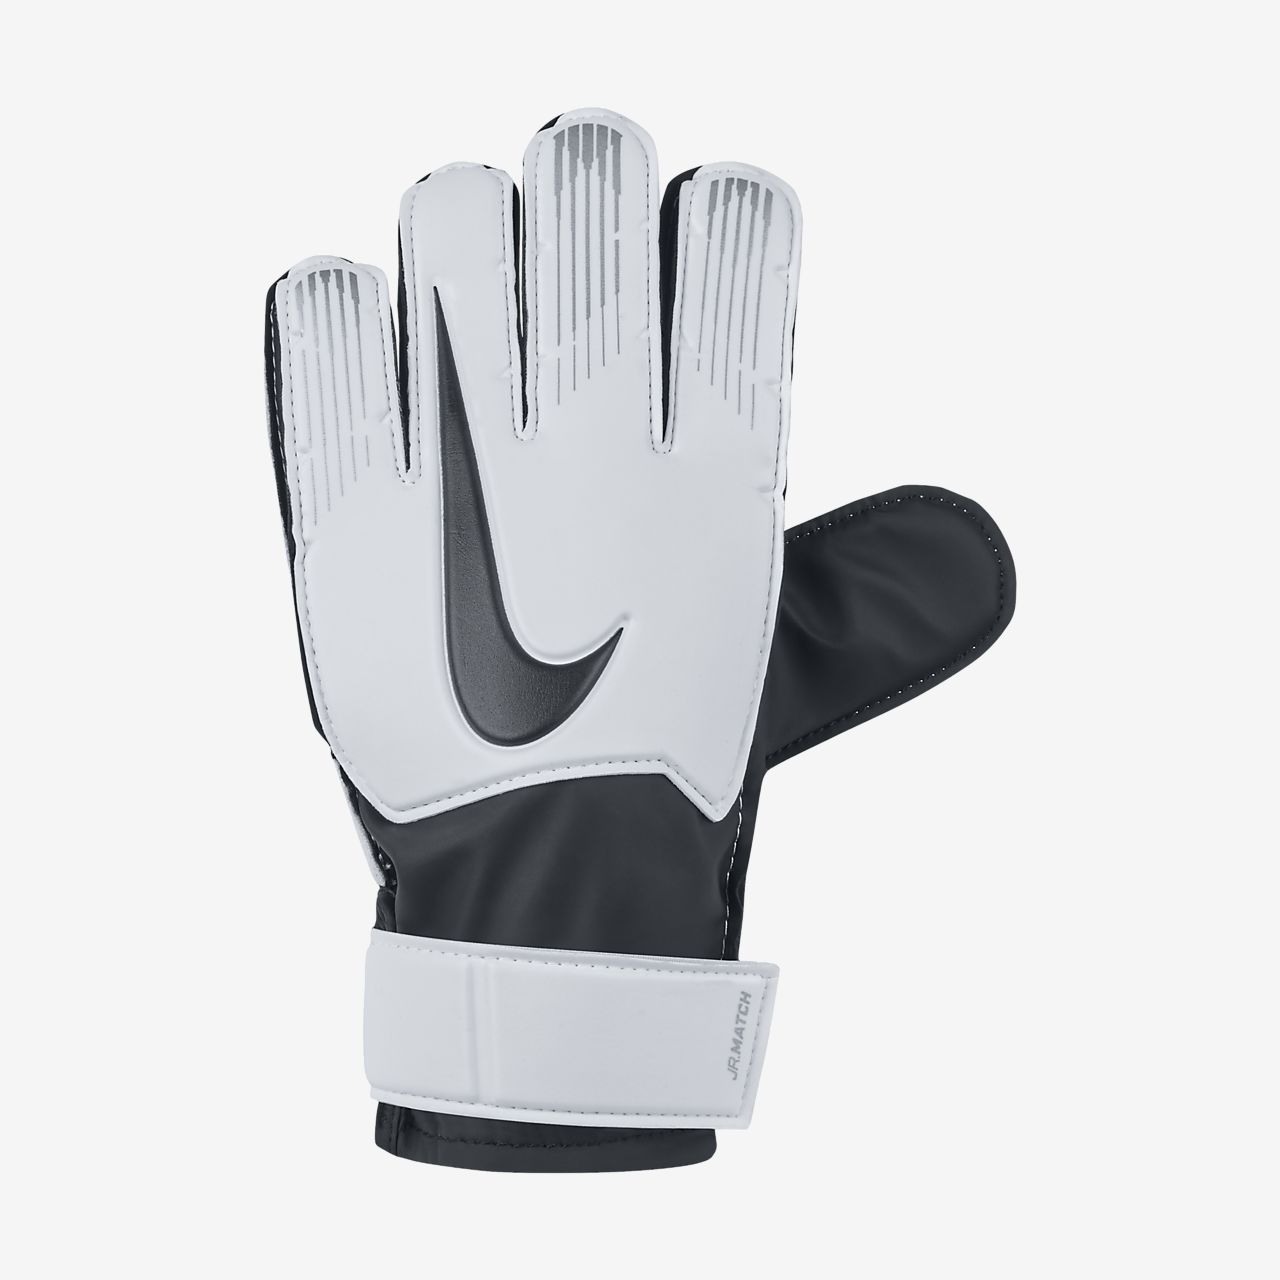 Nike Junior Glove Size Chart